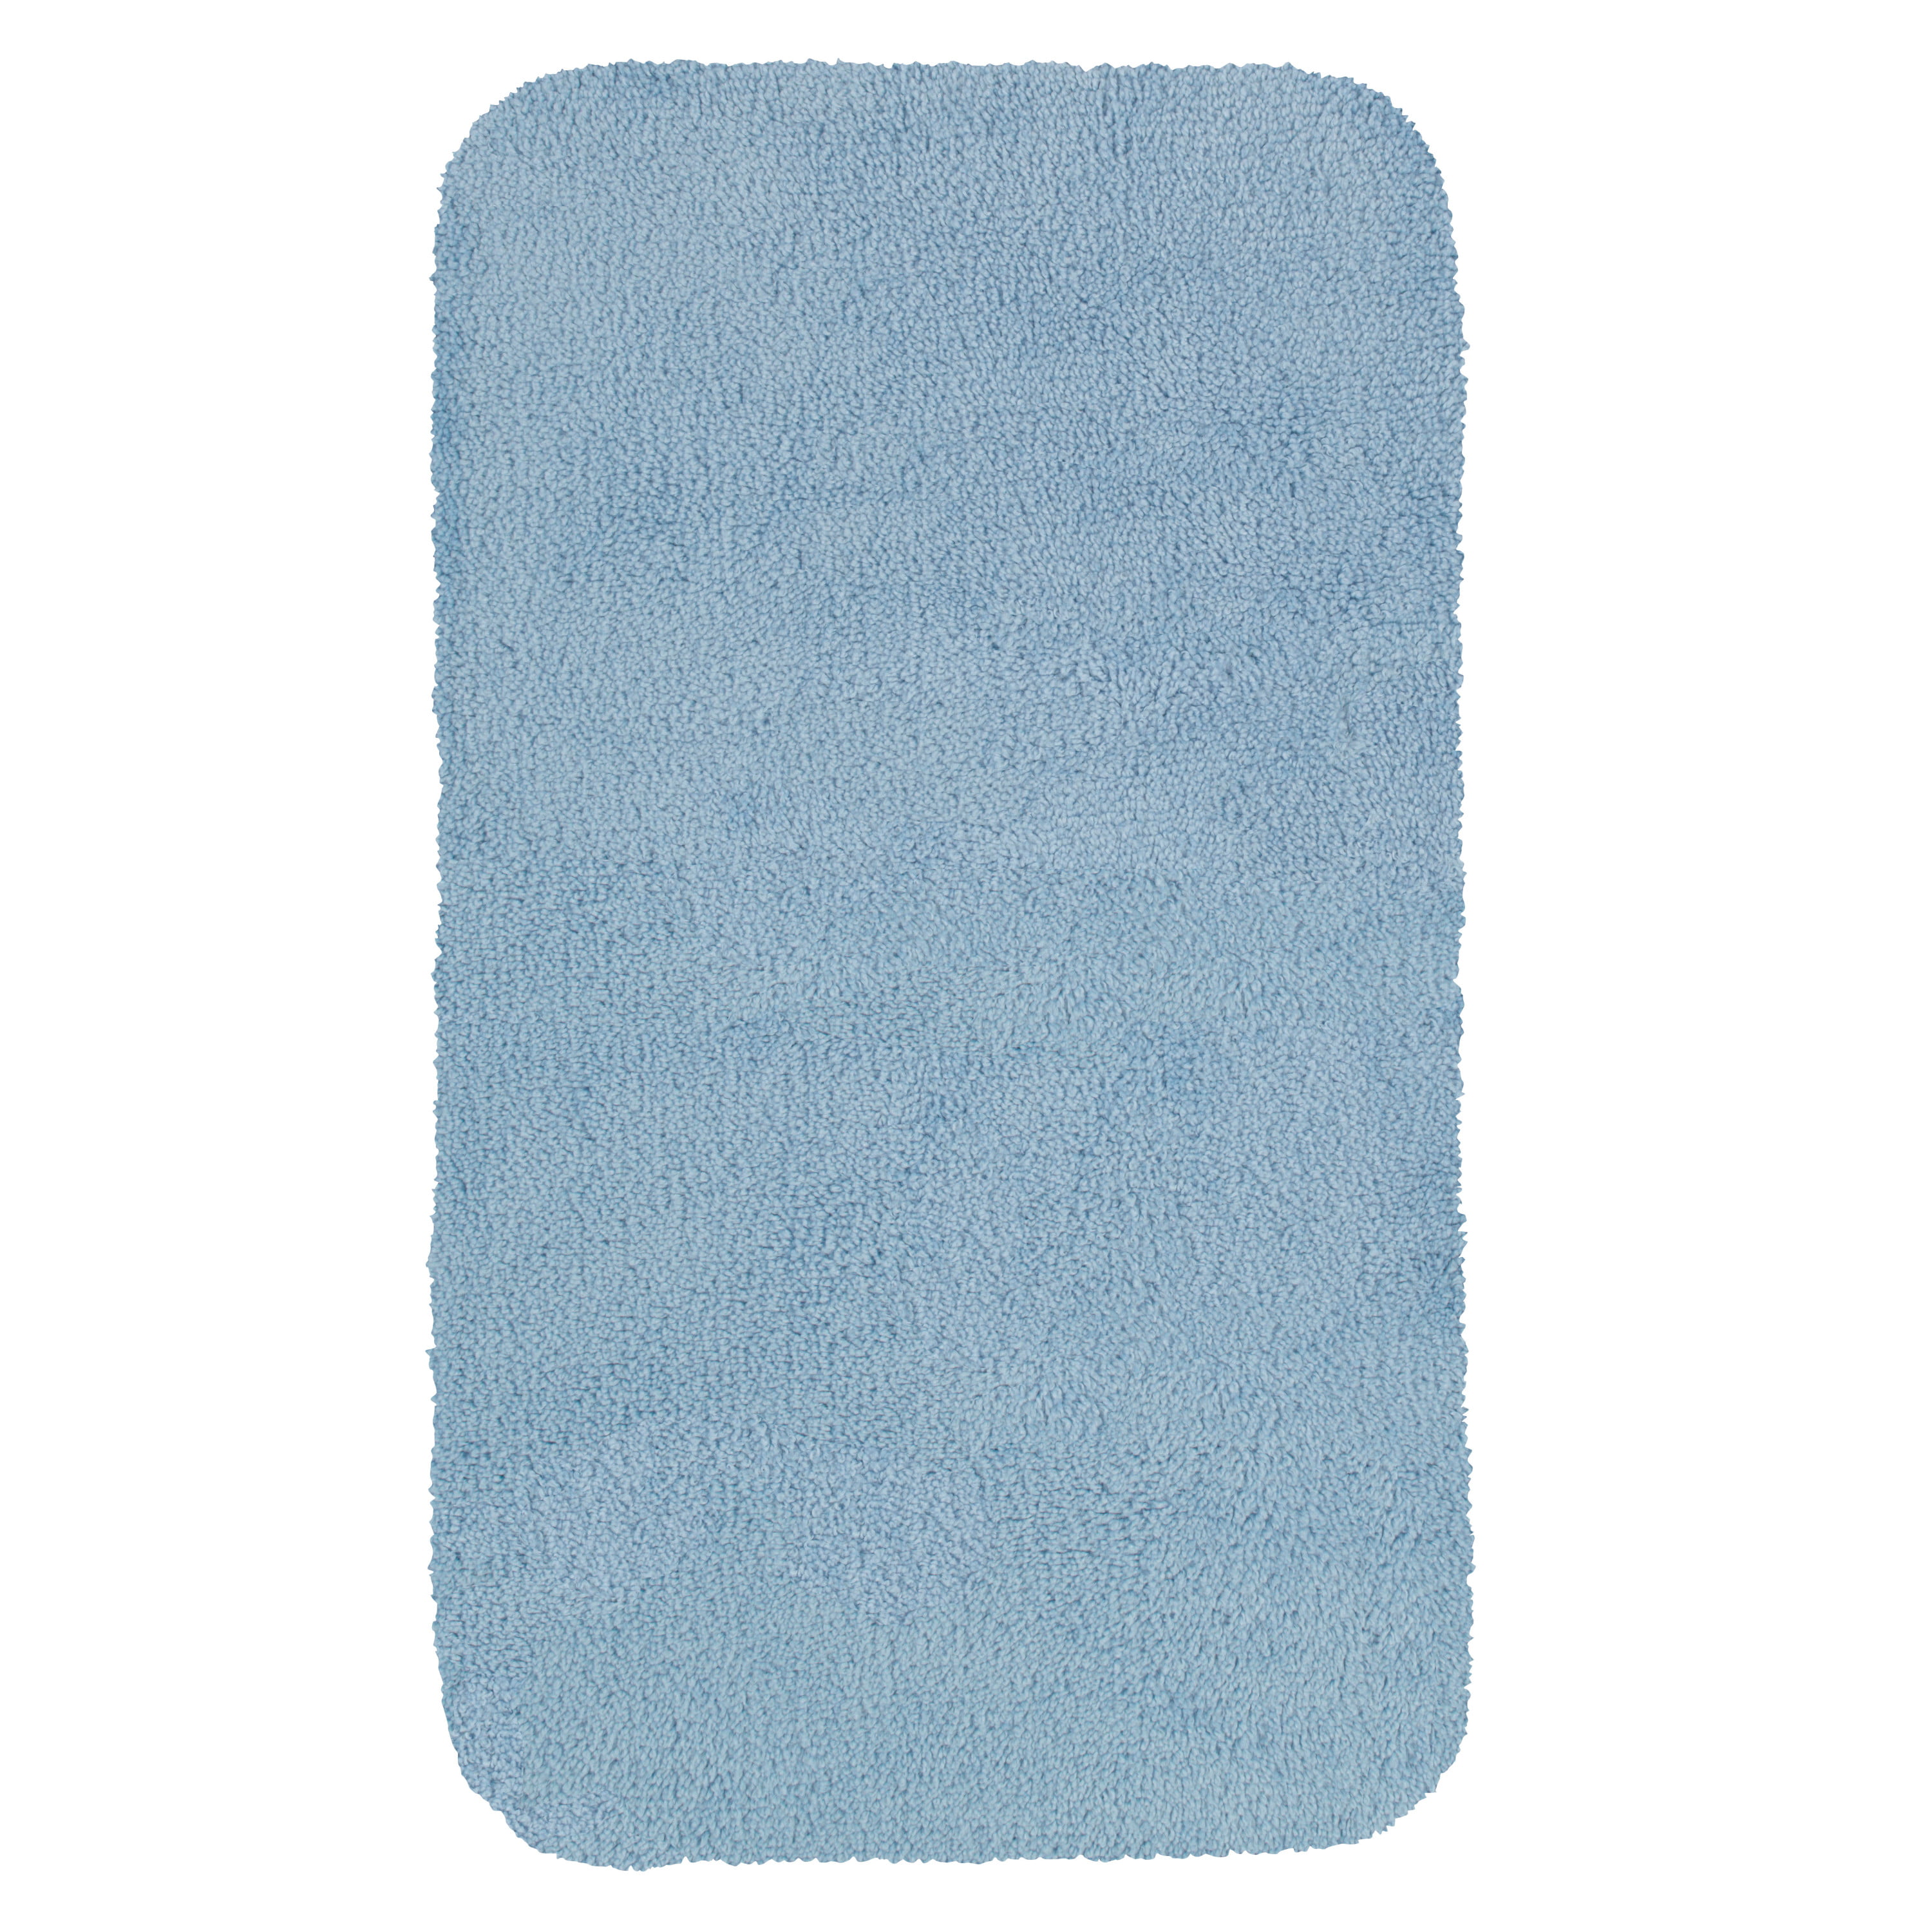 Mohawk Home Legacy Bath Rug Blue Mist, 2'x3'4", Light Blue